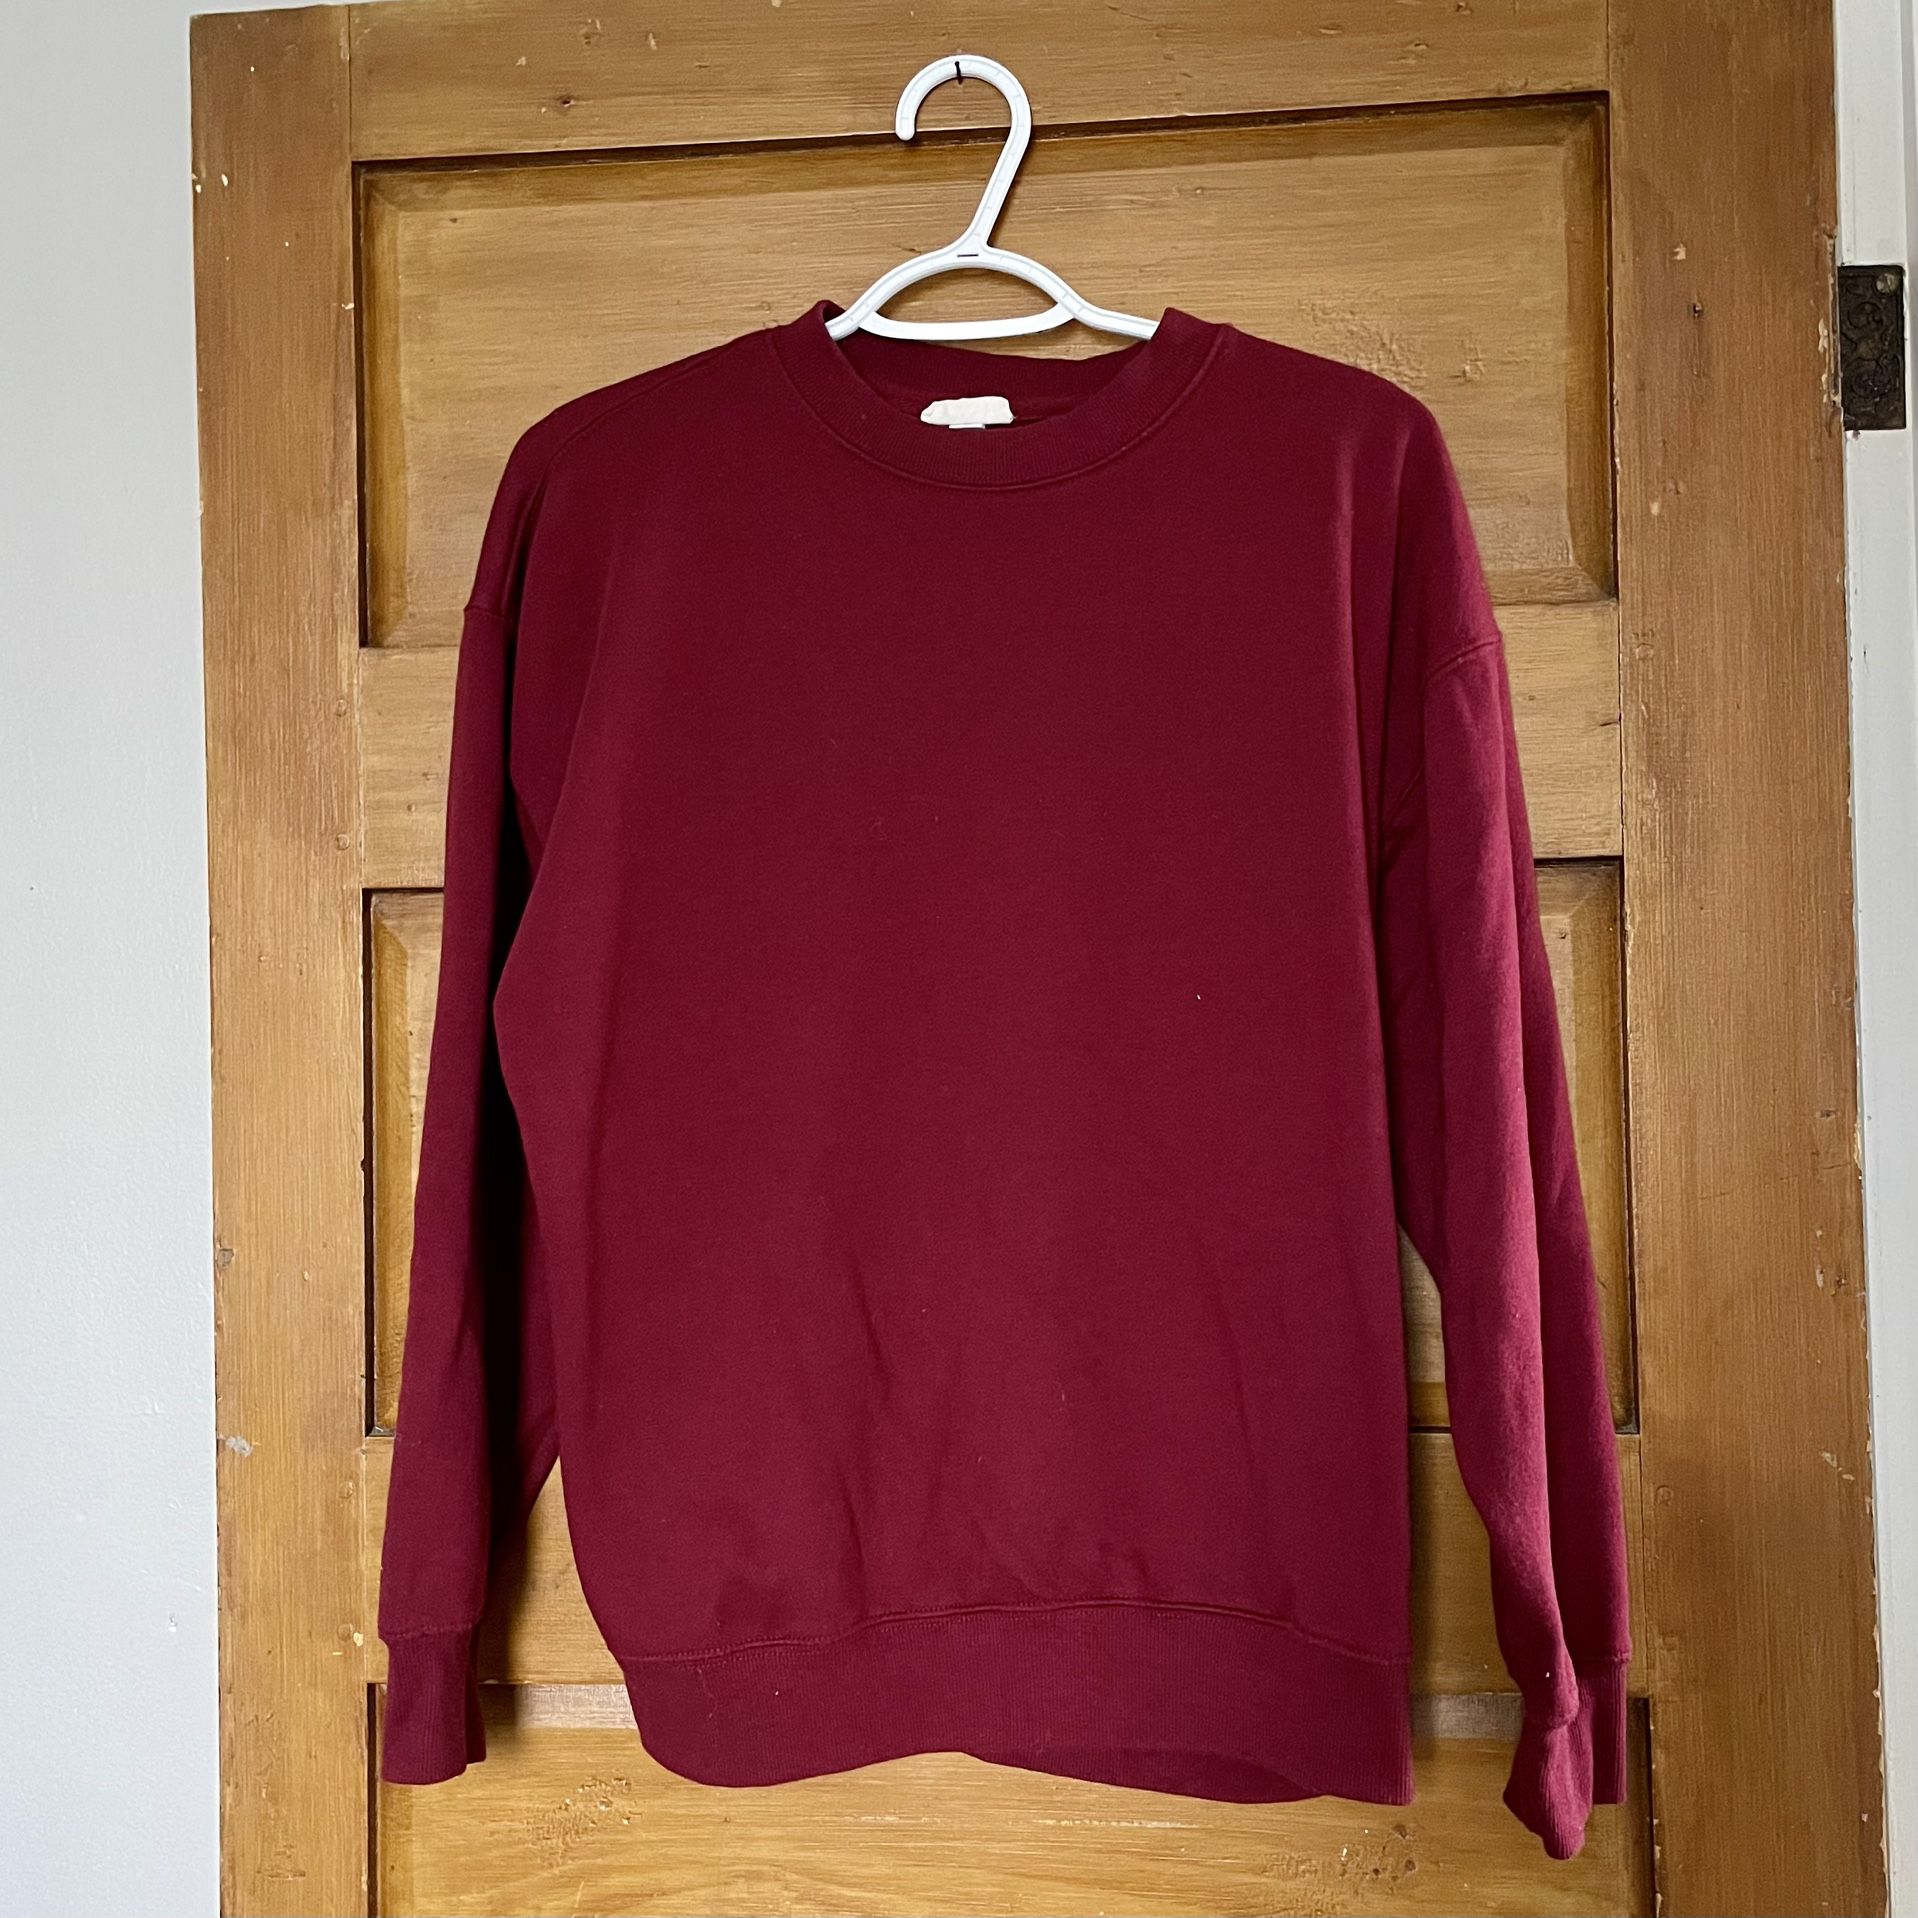 Reflex Burgundy Sweater Sweatshirt Small